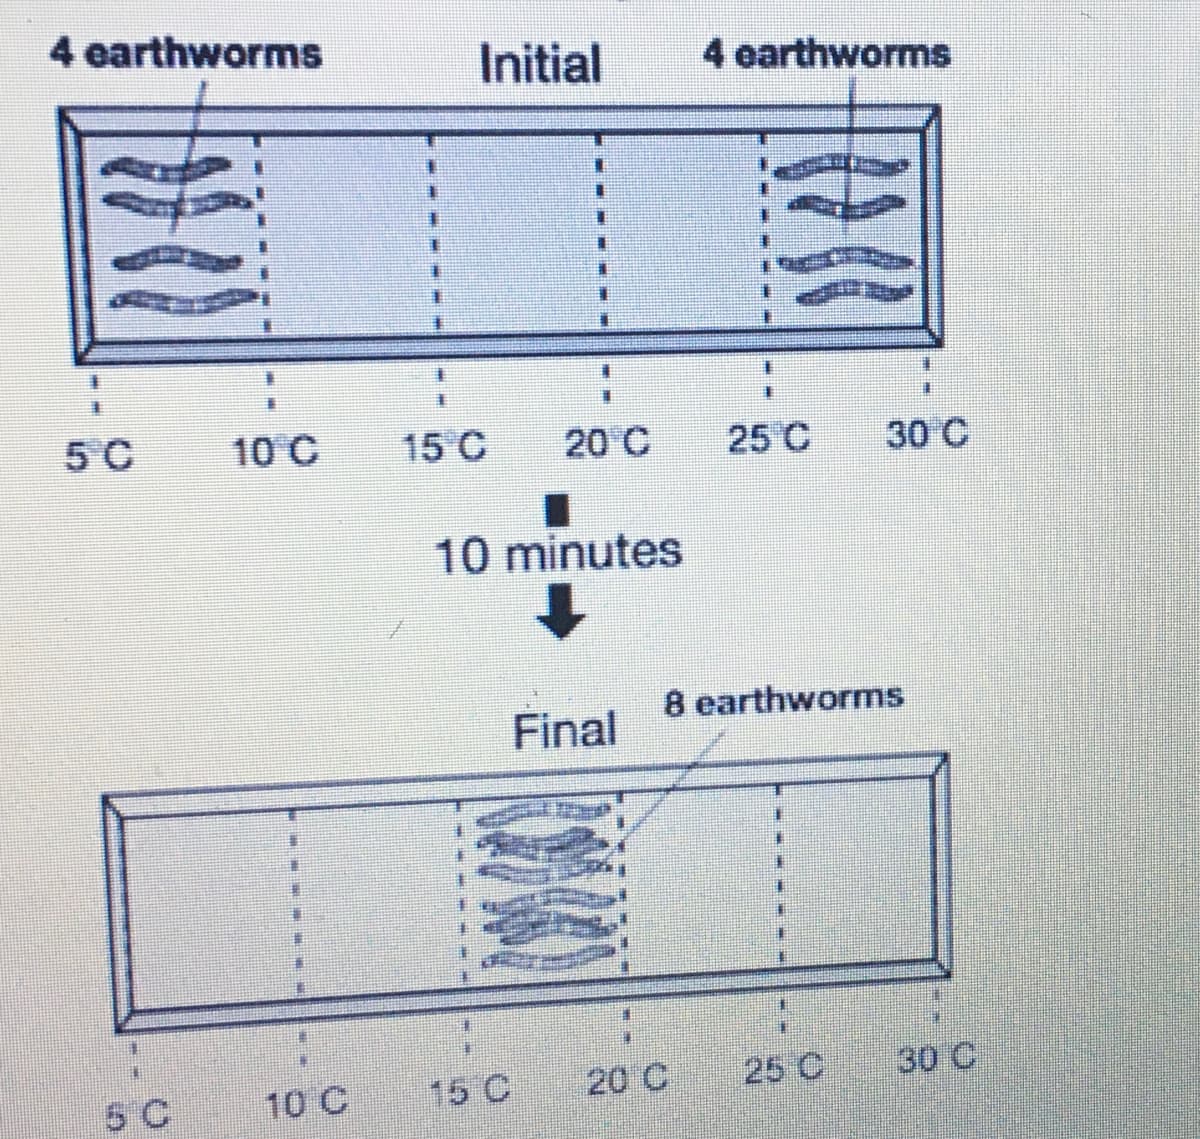 4 earthworms
Initial
4 earthworms
5 C
10 C
15 C
20 C
25 C
30 C
10 minutes
8 earthworms
Final
15 C
20 C
25 C
30 C
10 C
